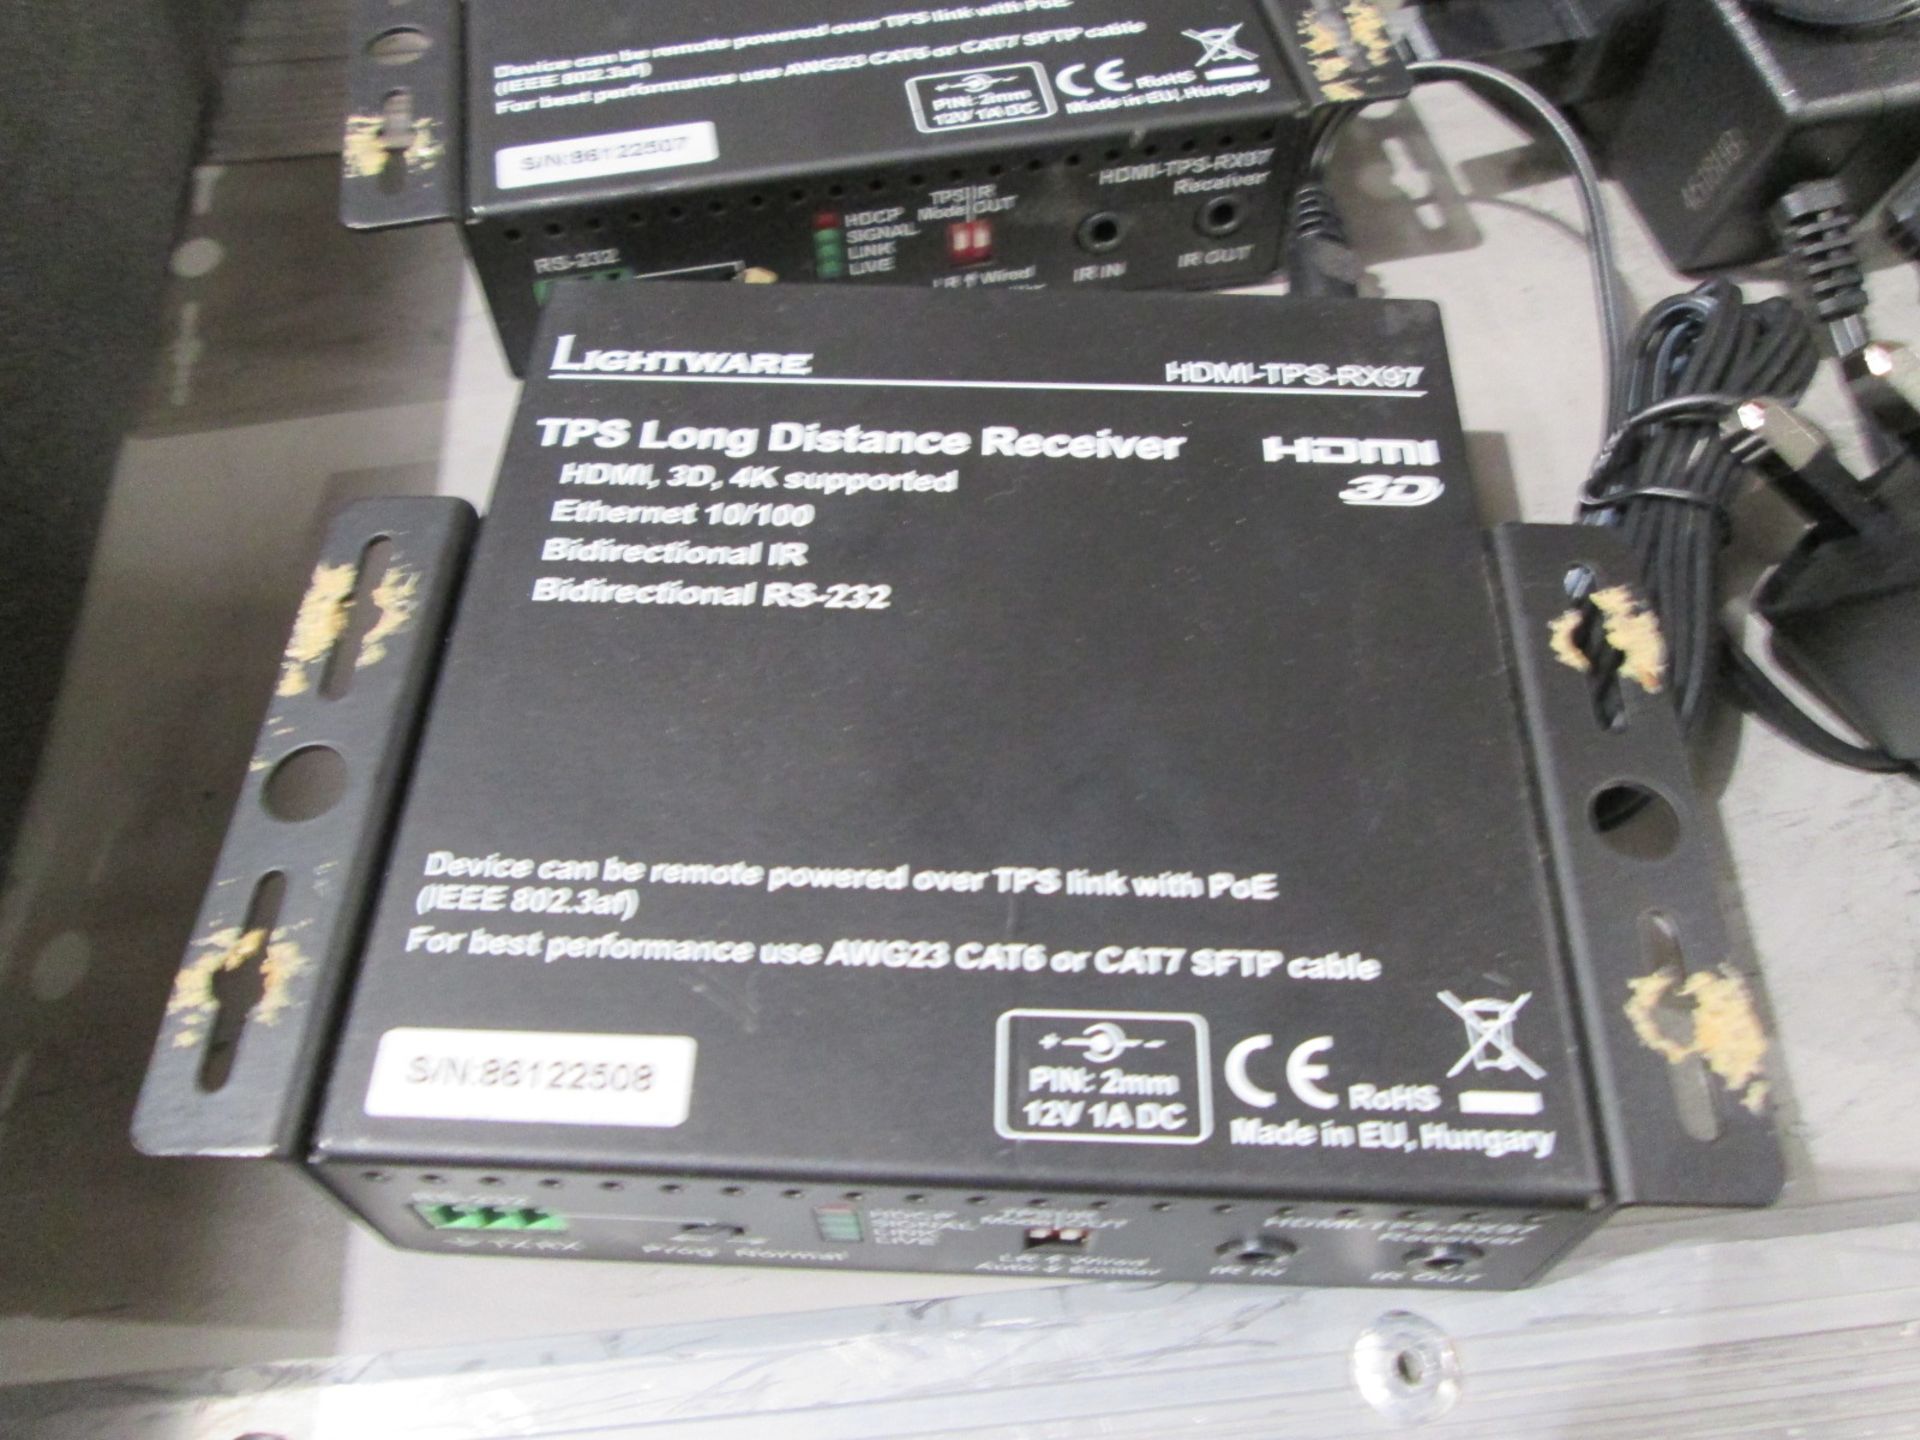 Lightware HDMI/DVI/VGA/ Display Port Tramsmitter / Receiver over Ethernet. (Qty 5) - Image 5 of 6